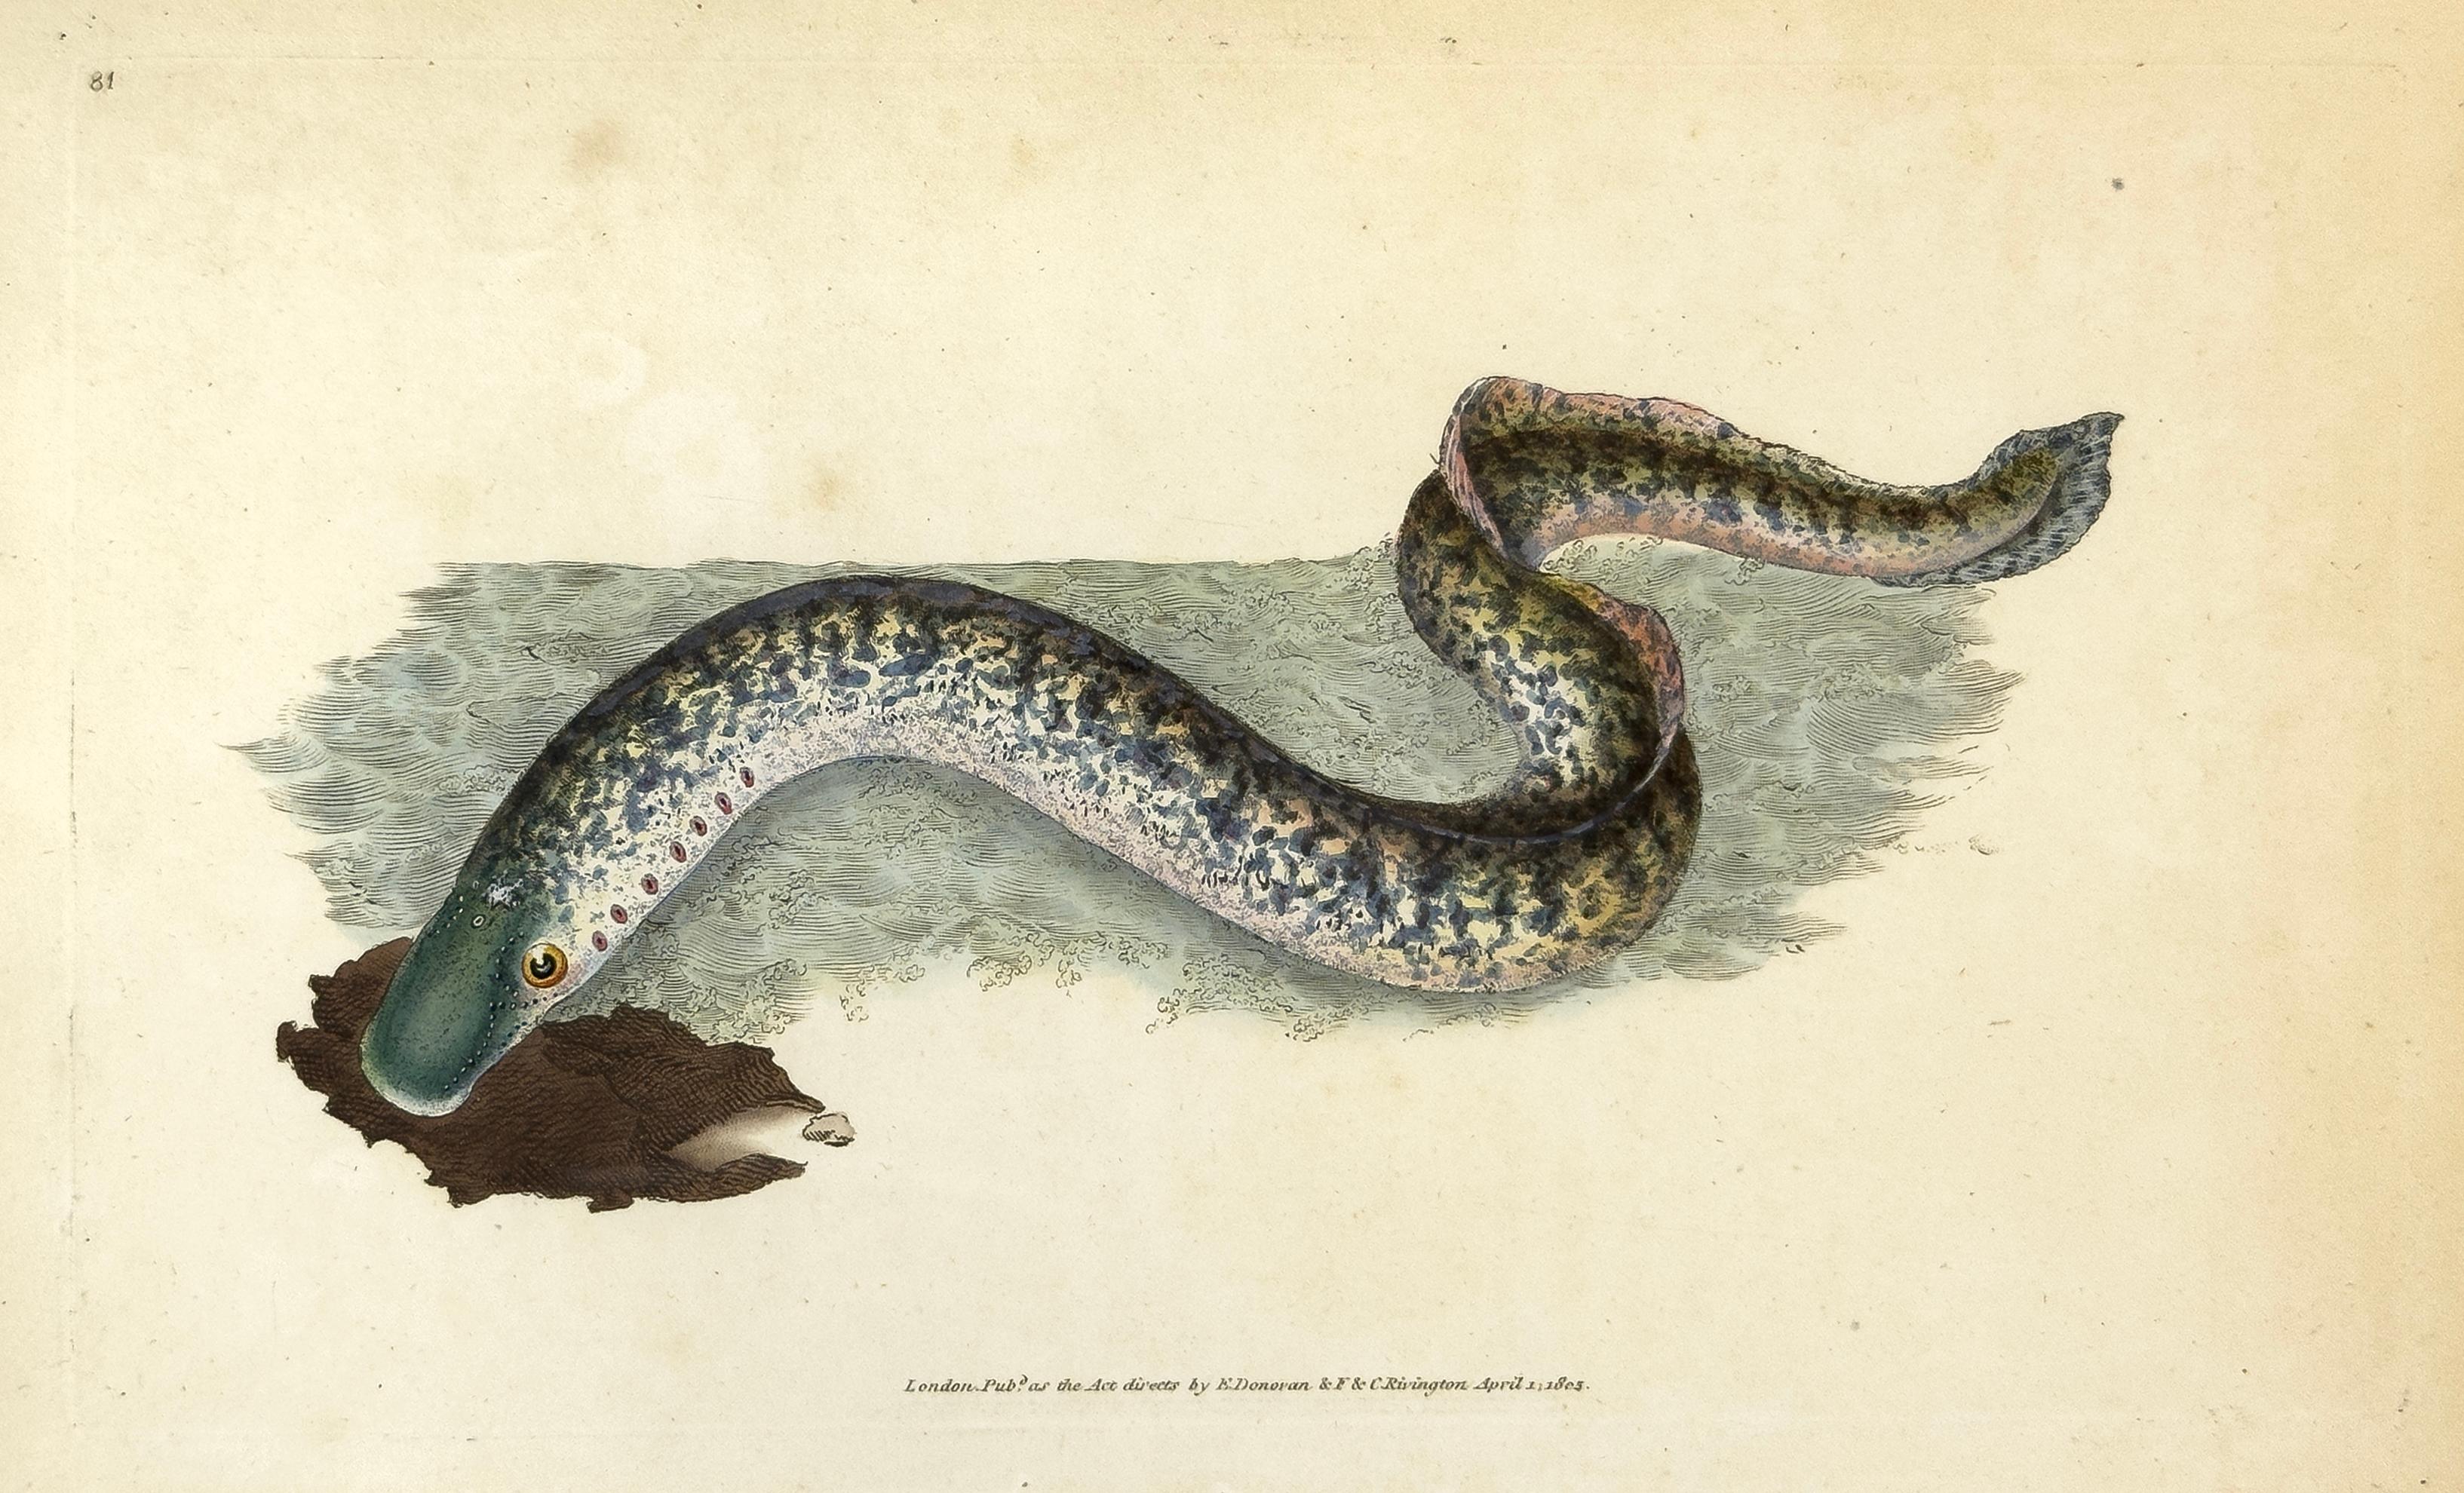 Edward Donovan Animal Print - 81: Petromyzon marinus, Marine or Spotted Lamprey